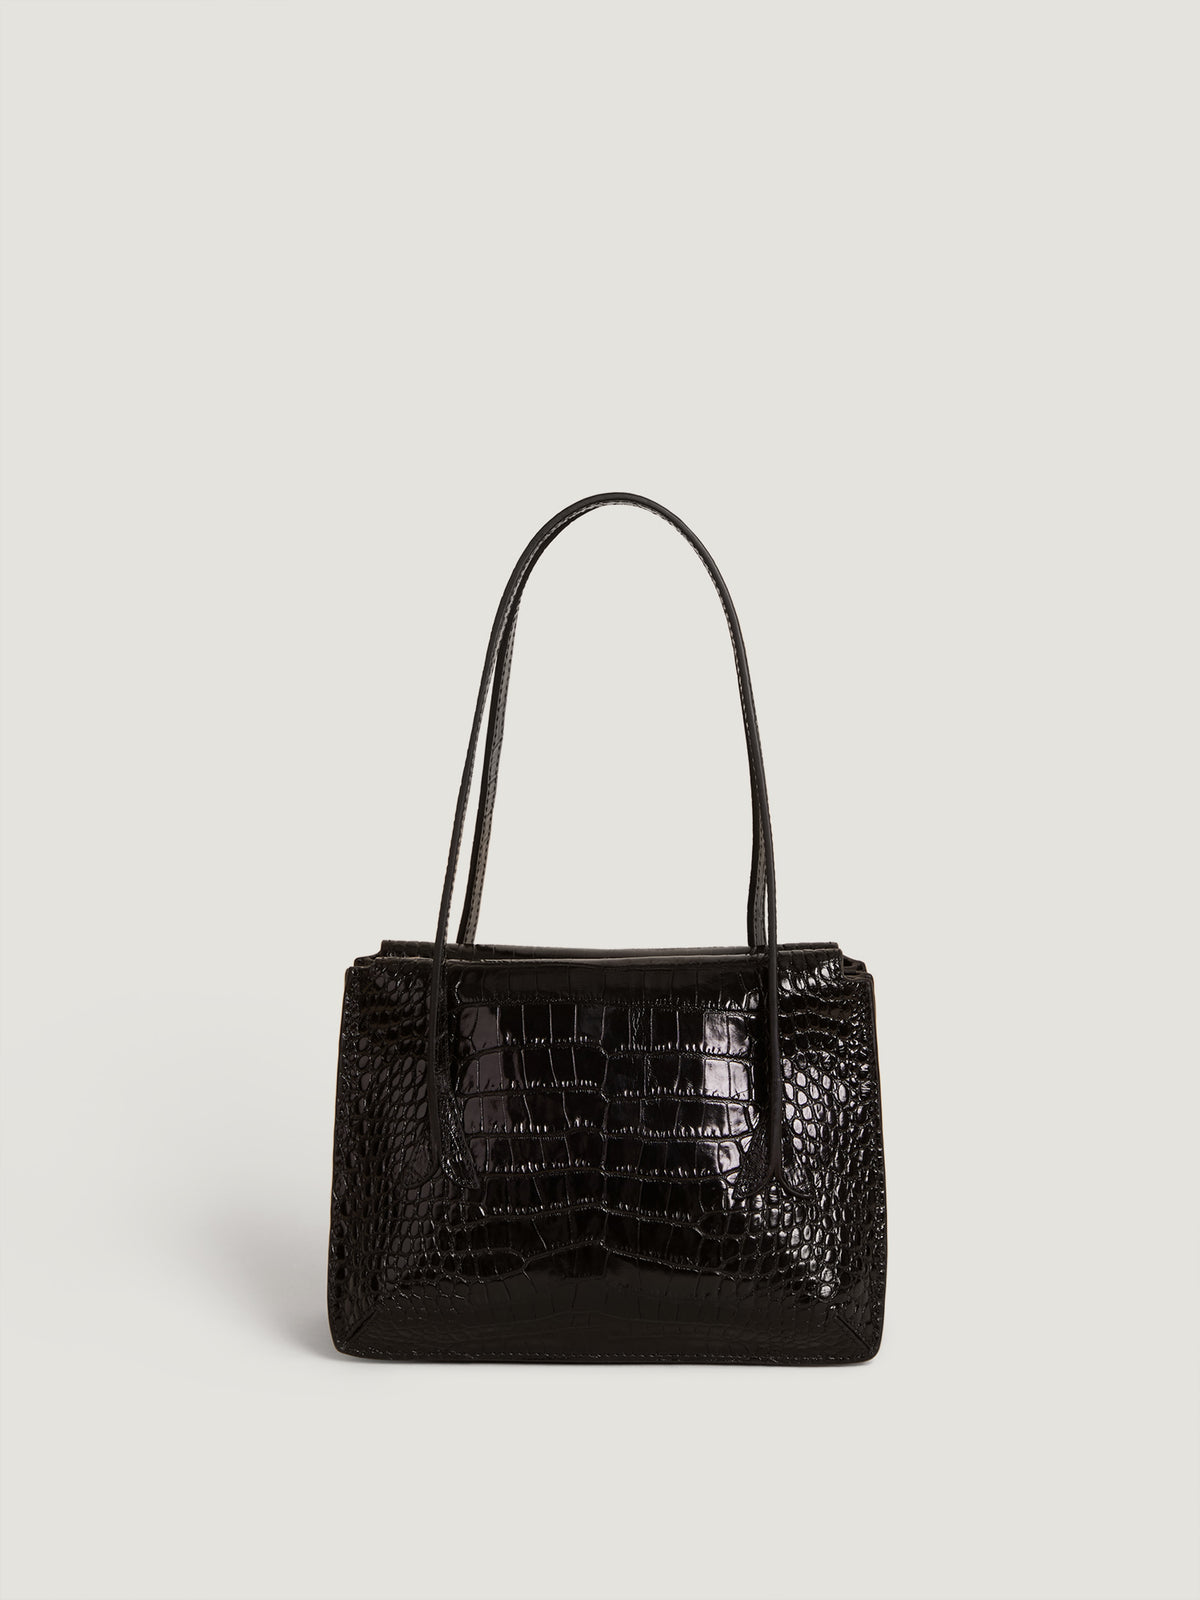 Black croco-like leather handbag